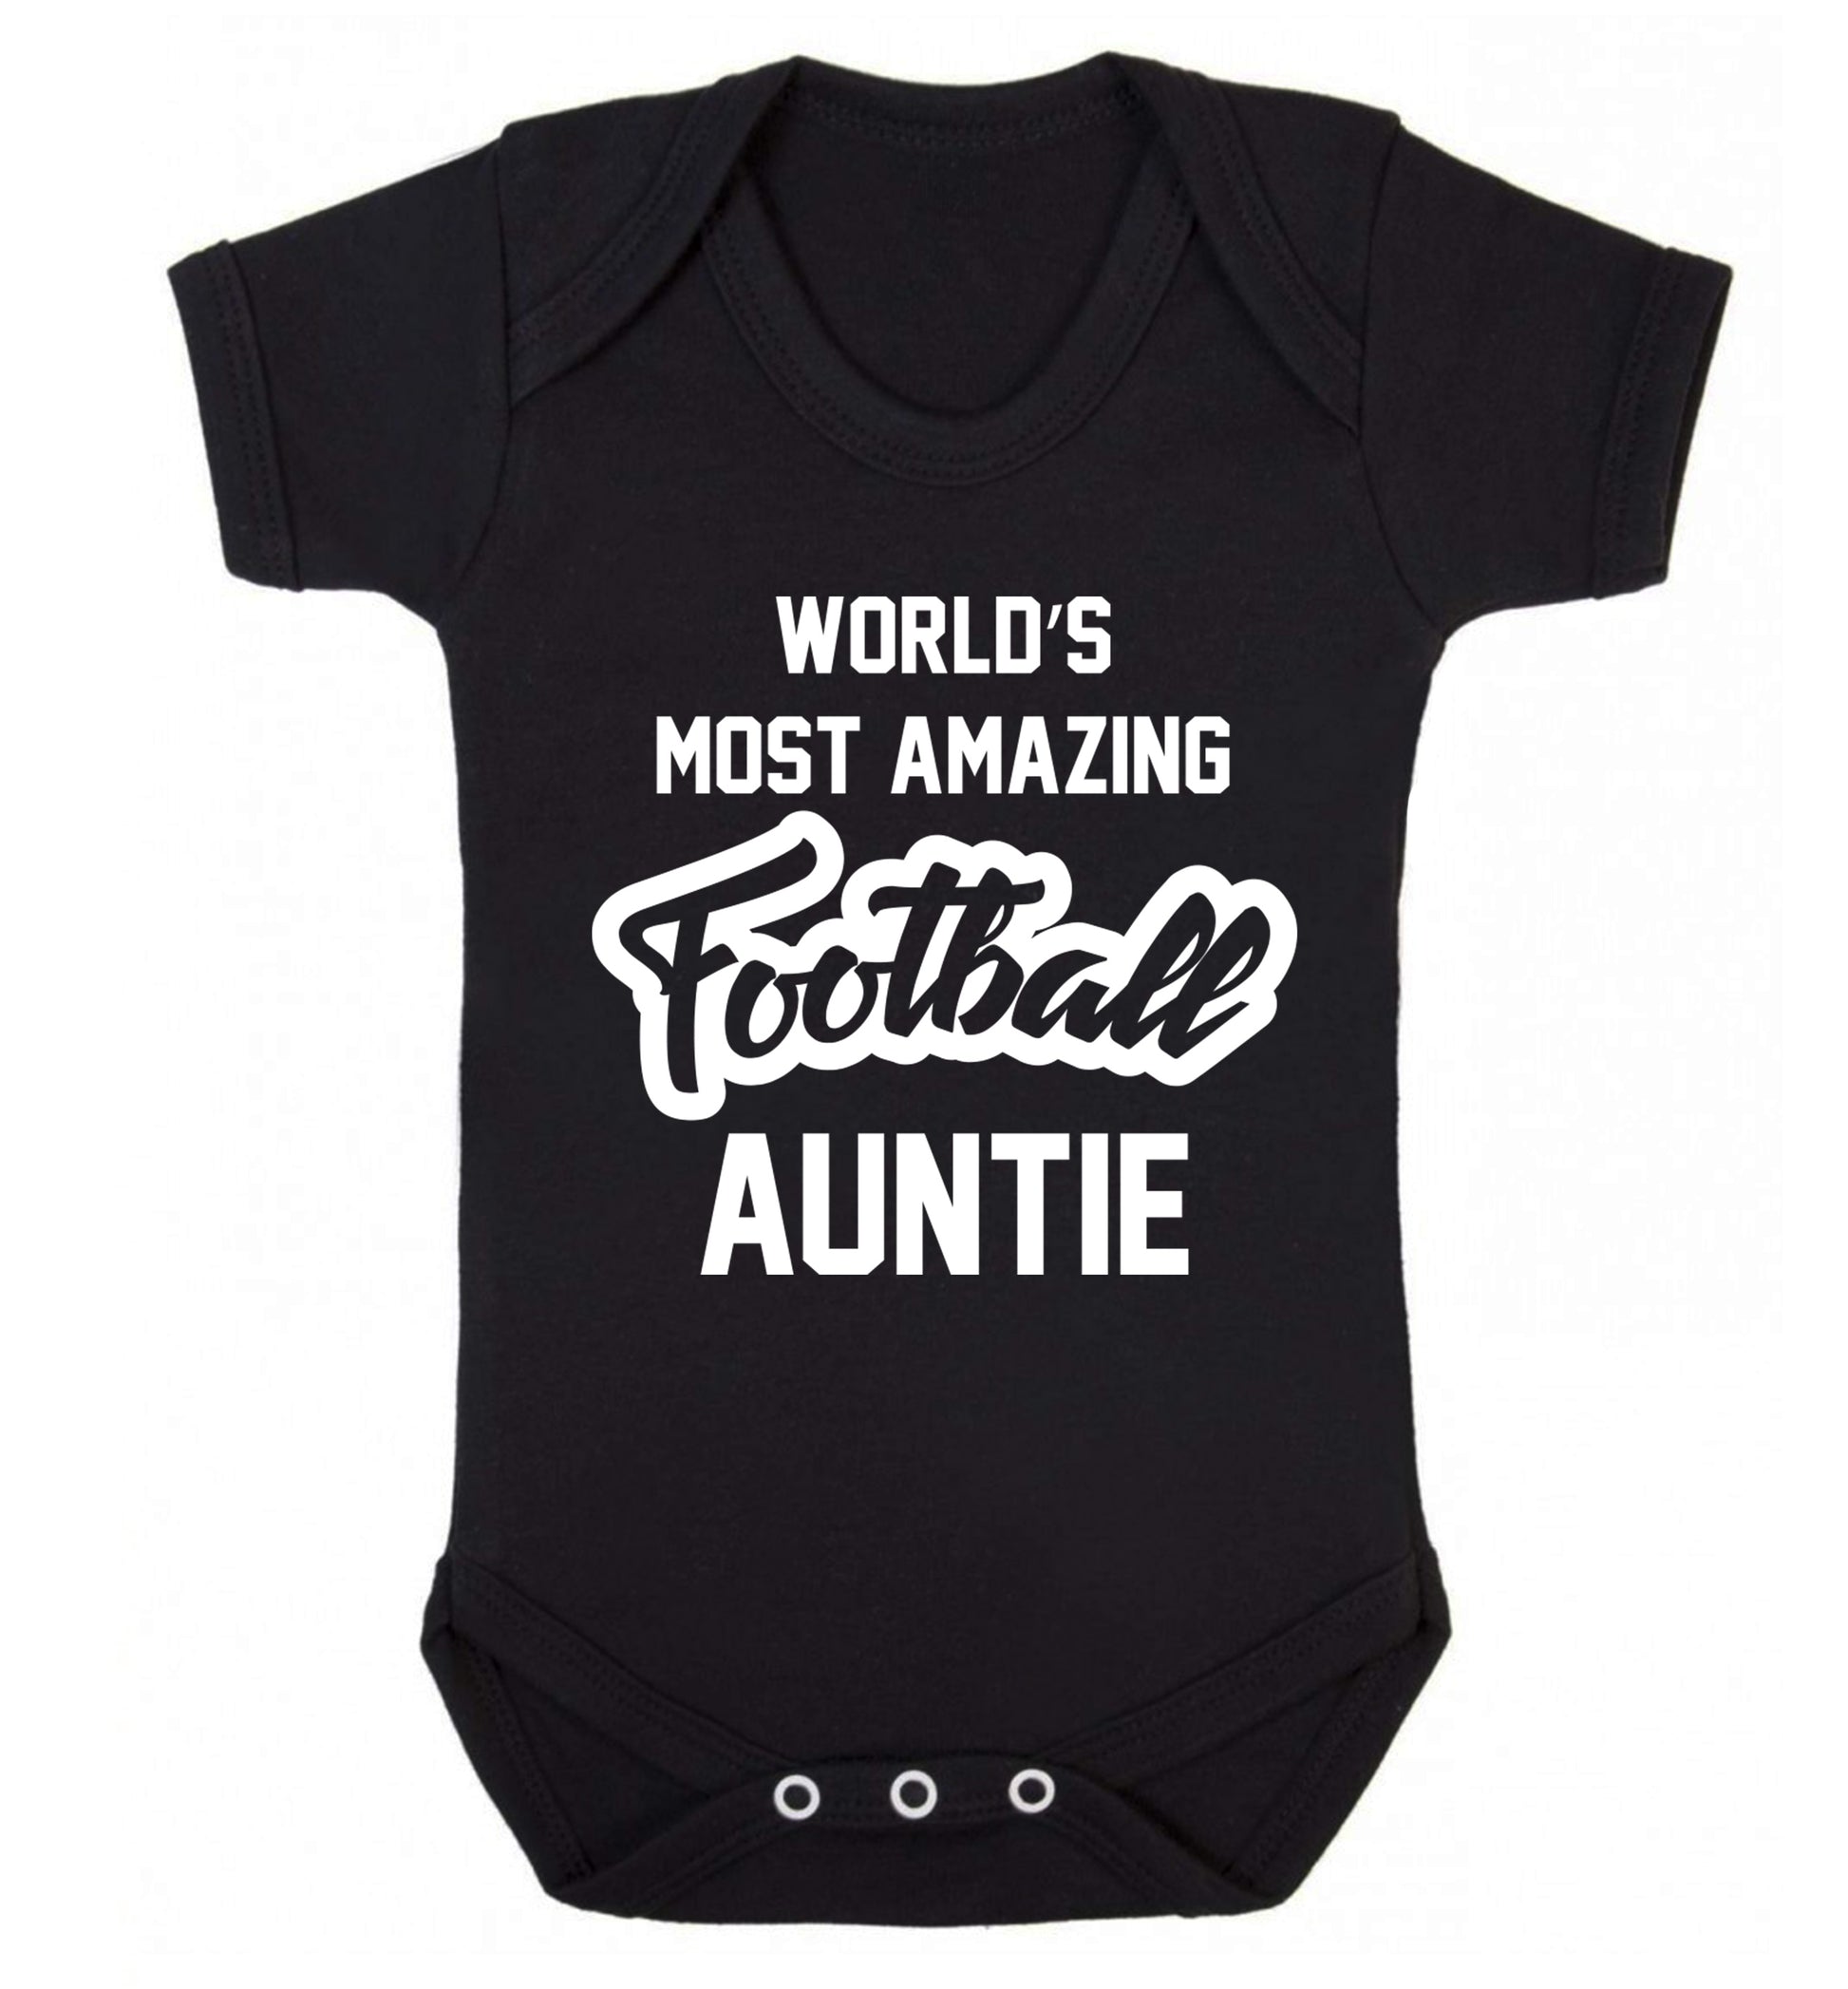 Worlds most amazing football auntie Baby Vest black 18-24 months